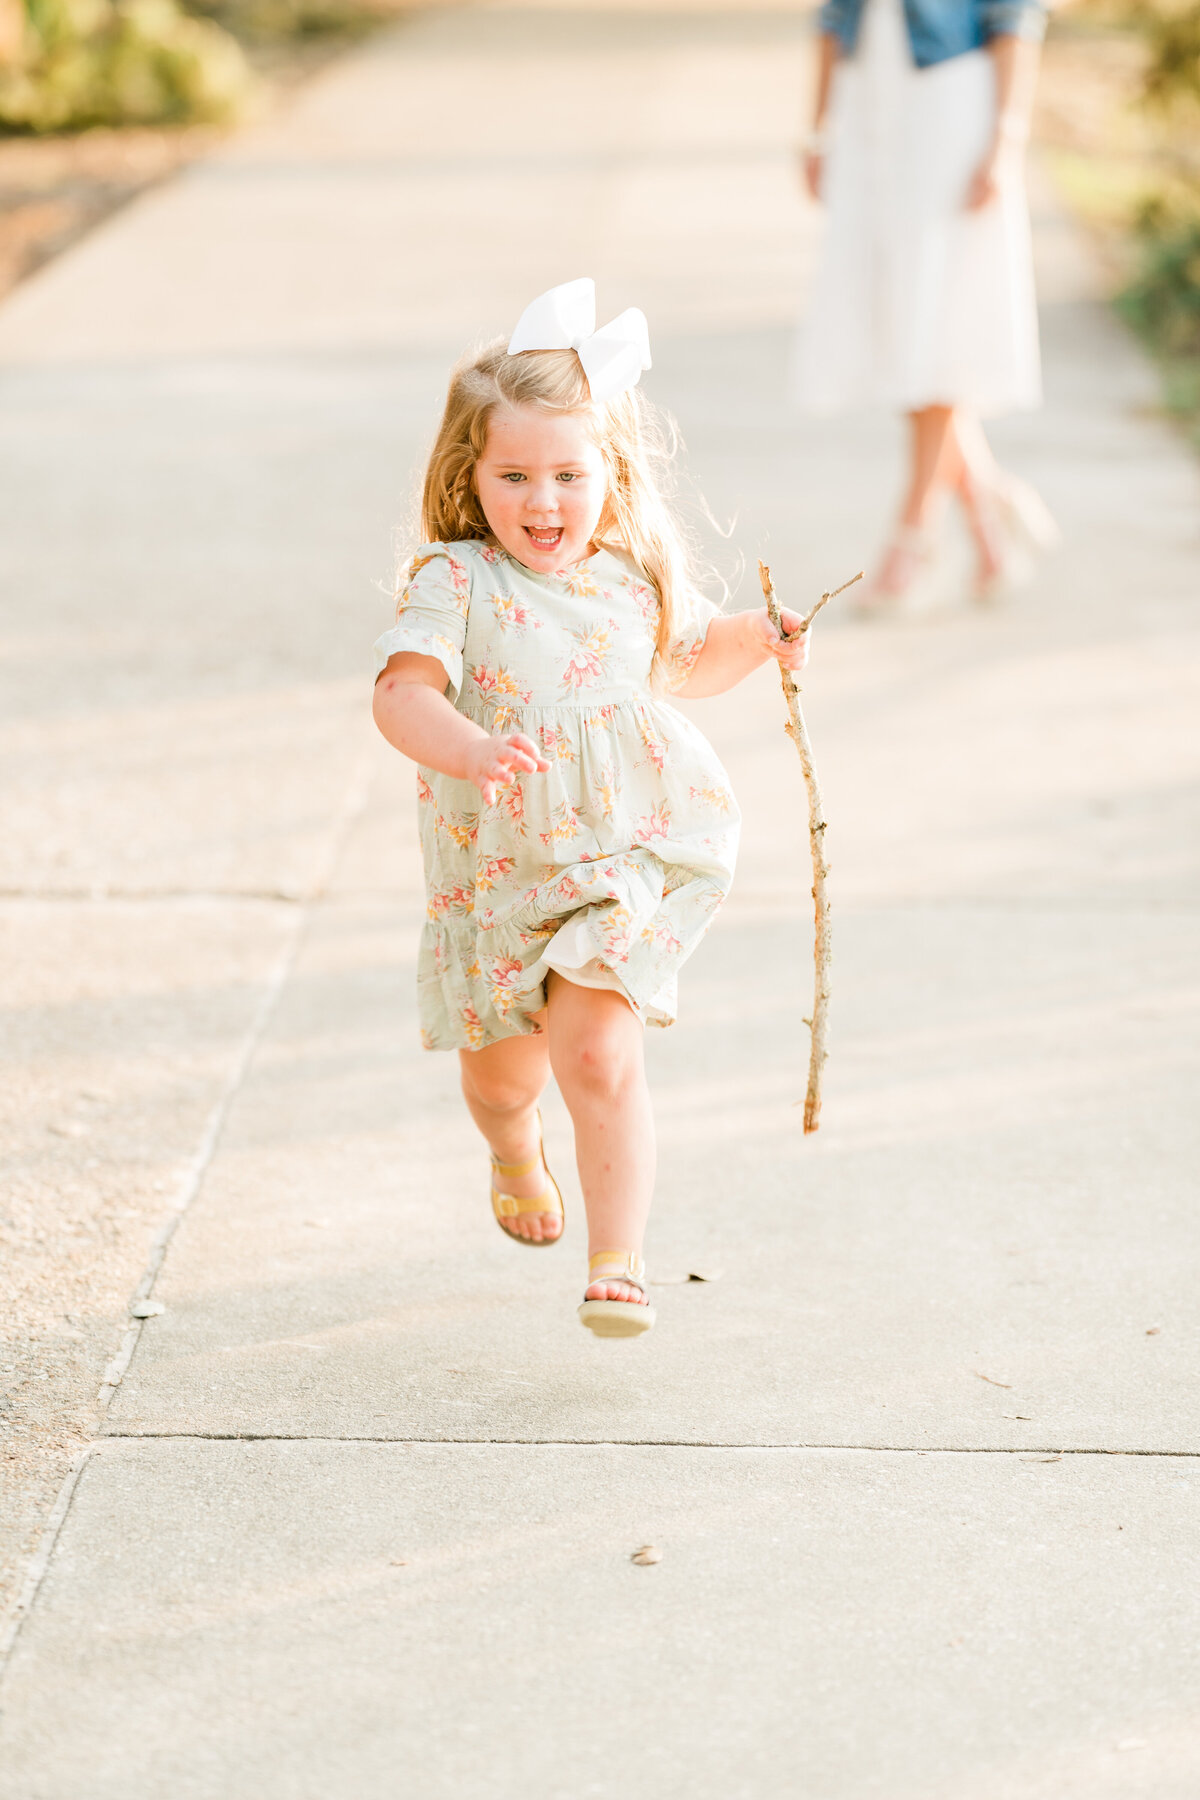 Little girl in a floral dress running